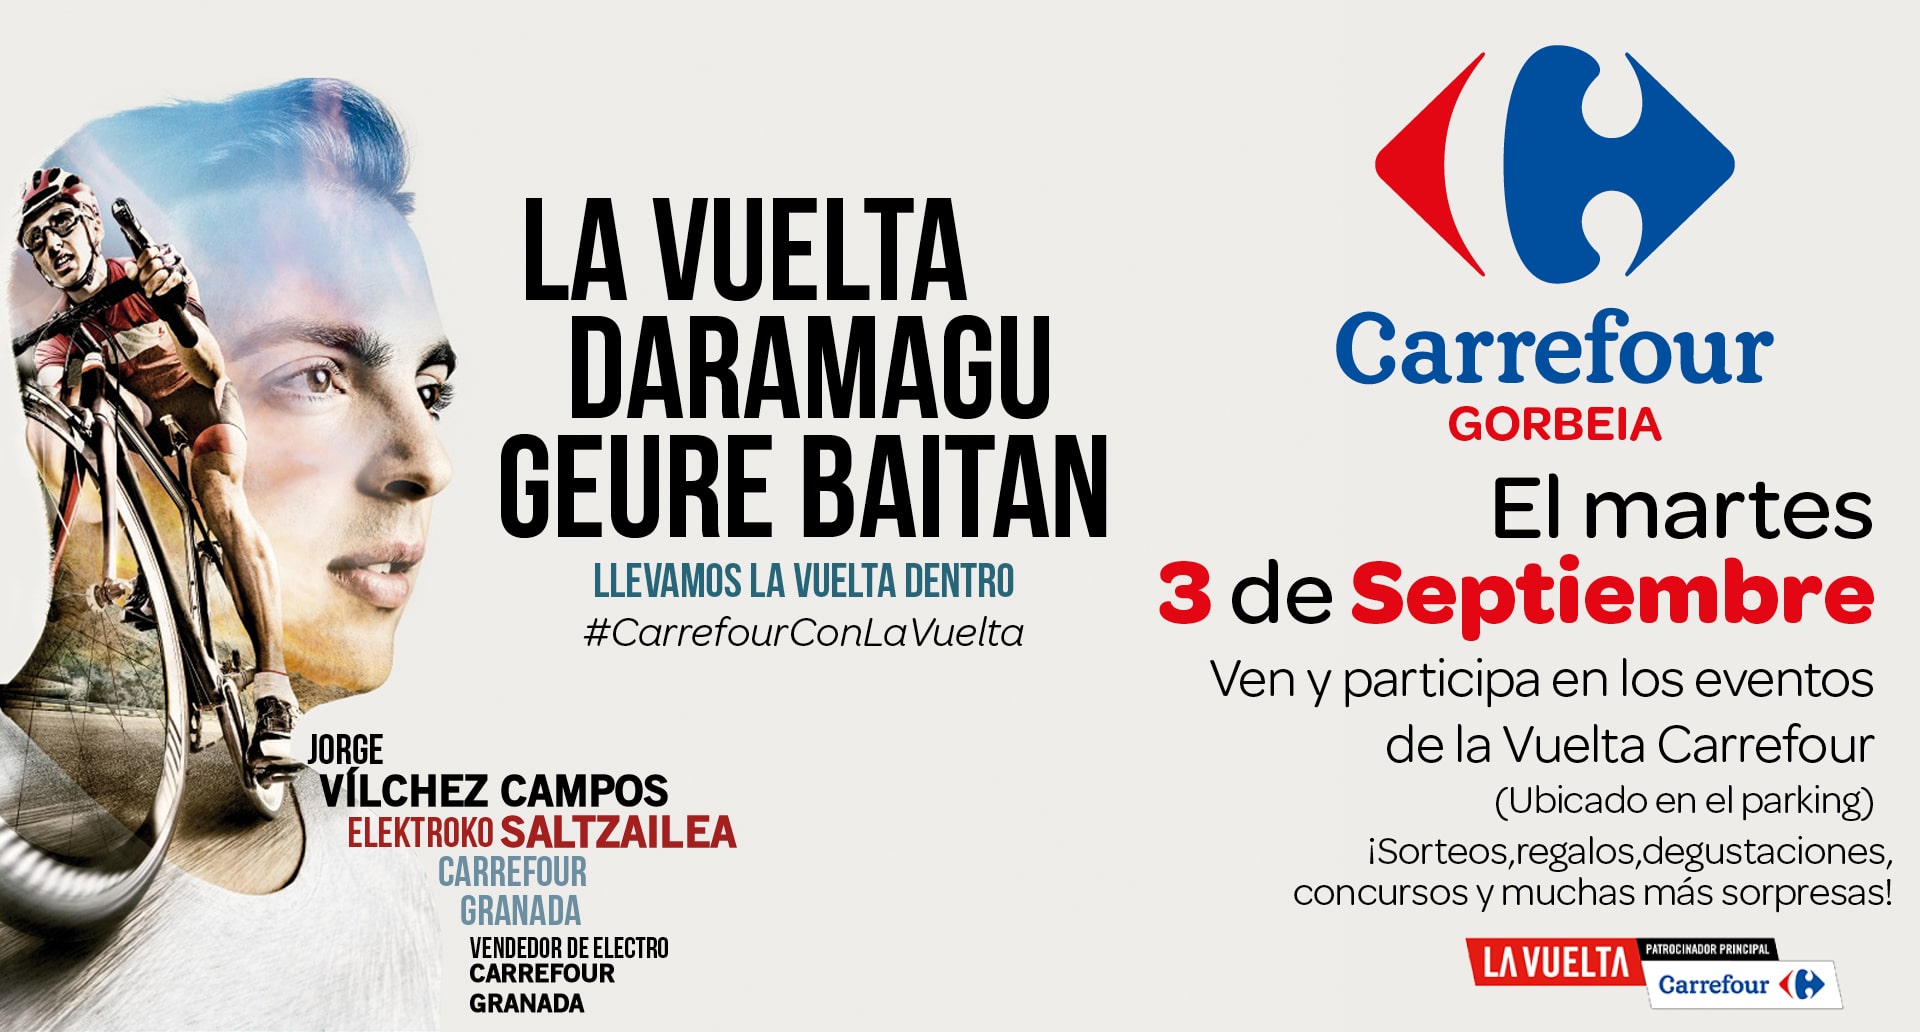 La Vuelta Carrefour llega al Parque Comercial Gorbeia